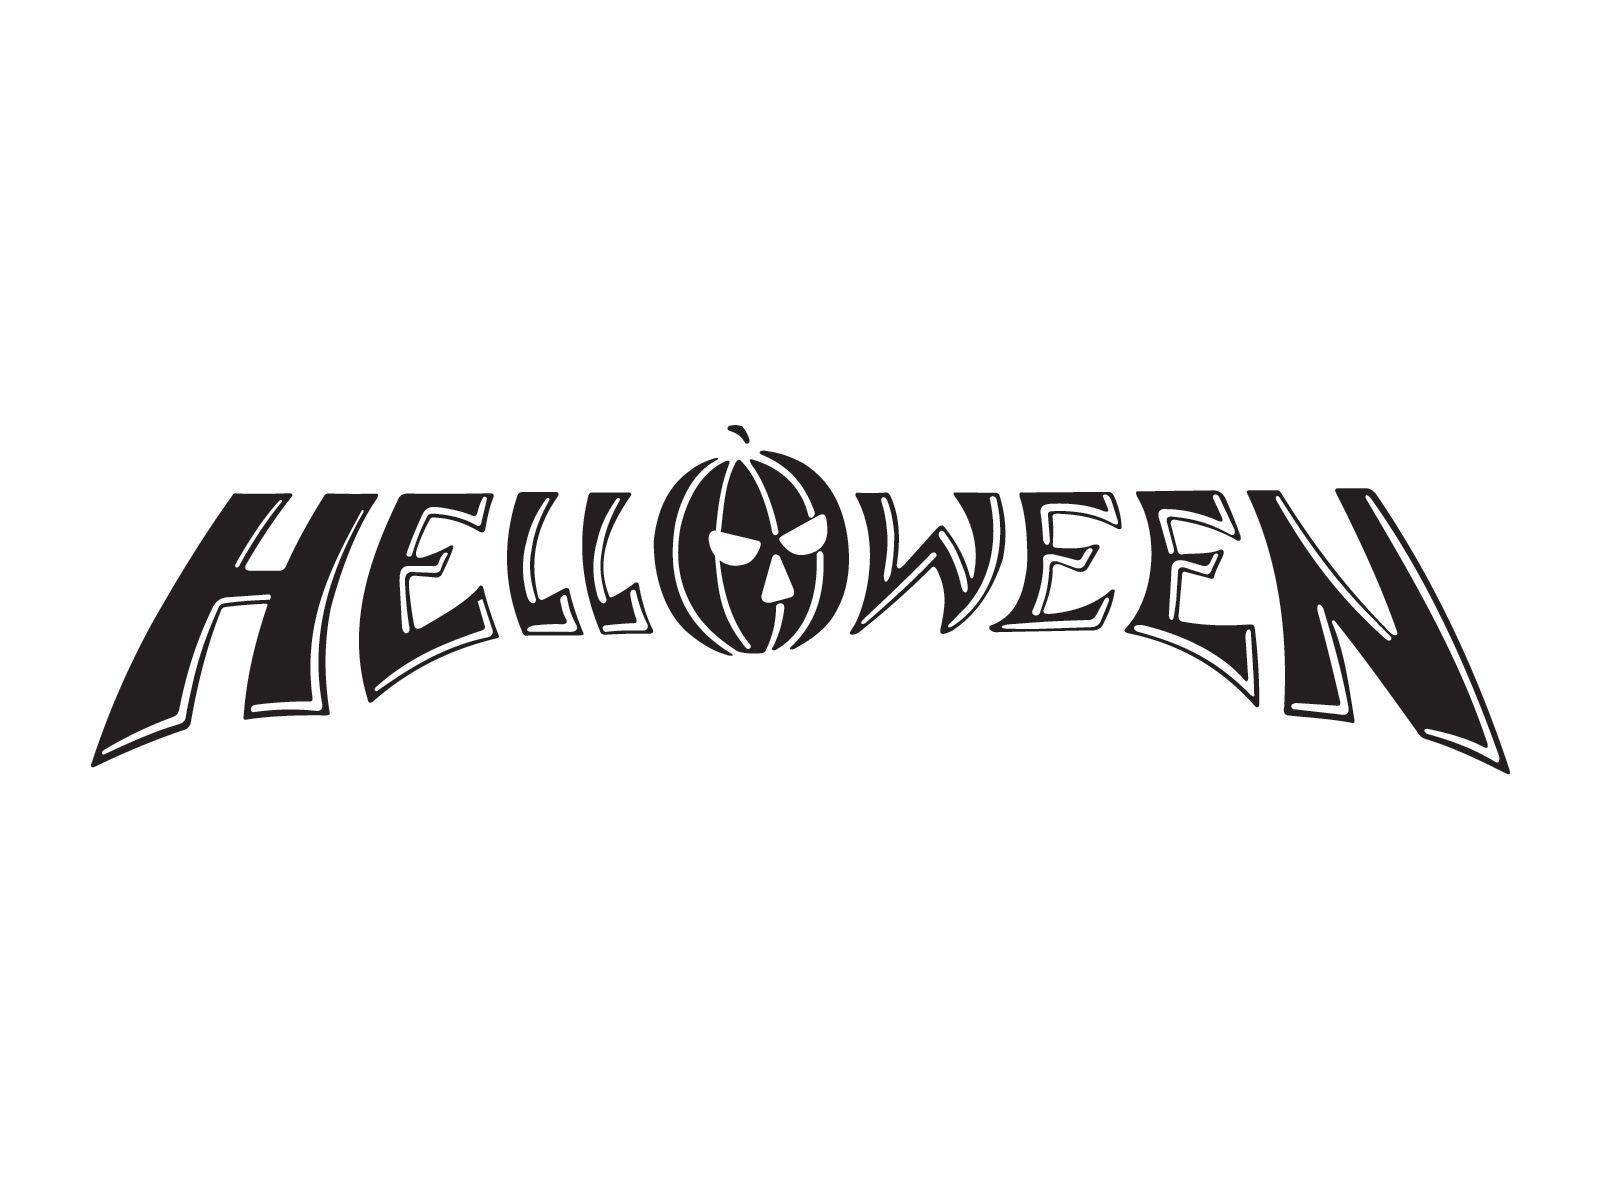 Helloween Logo - Helloween logo wallpaper. Band logos. Band logos